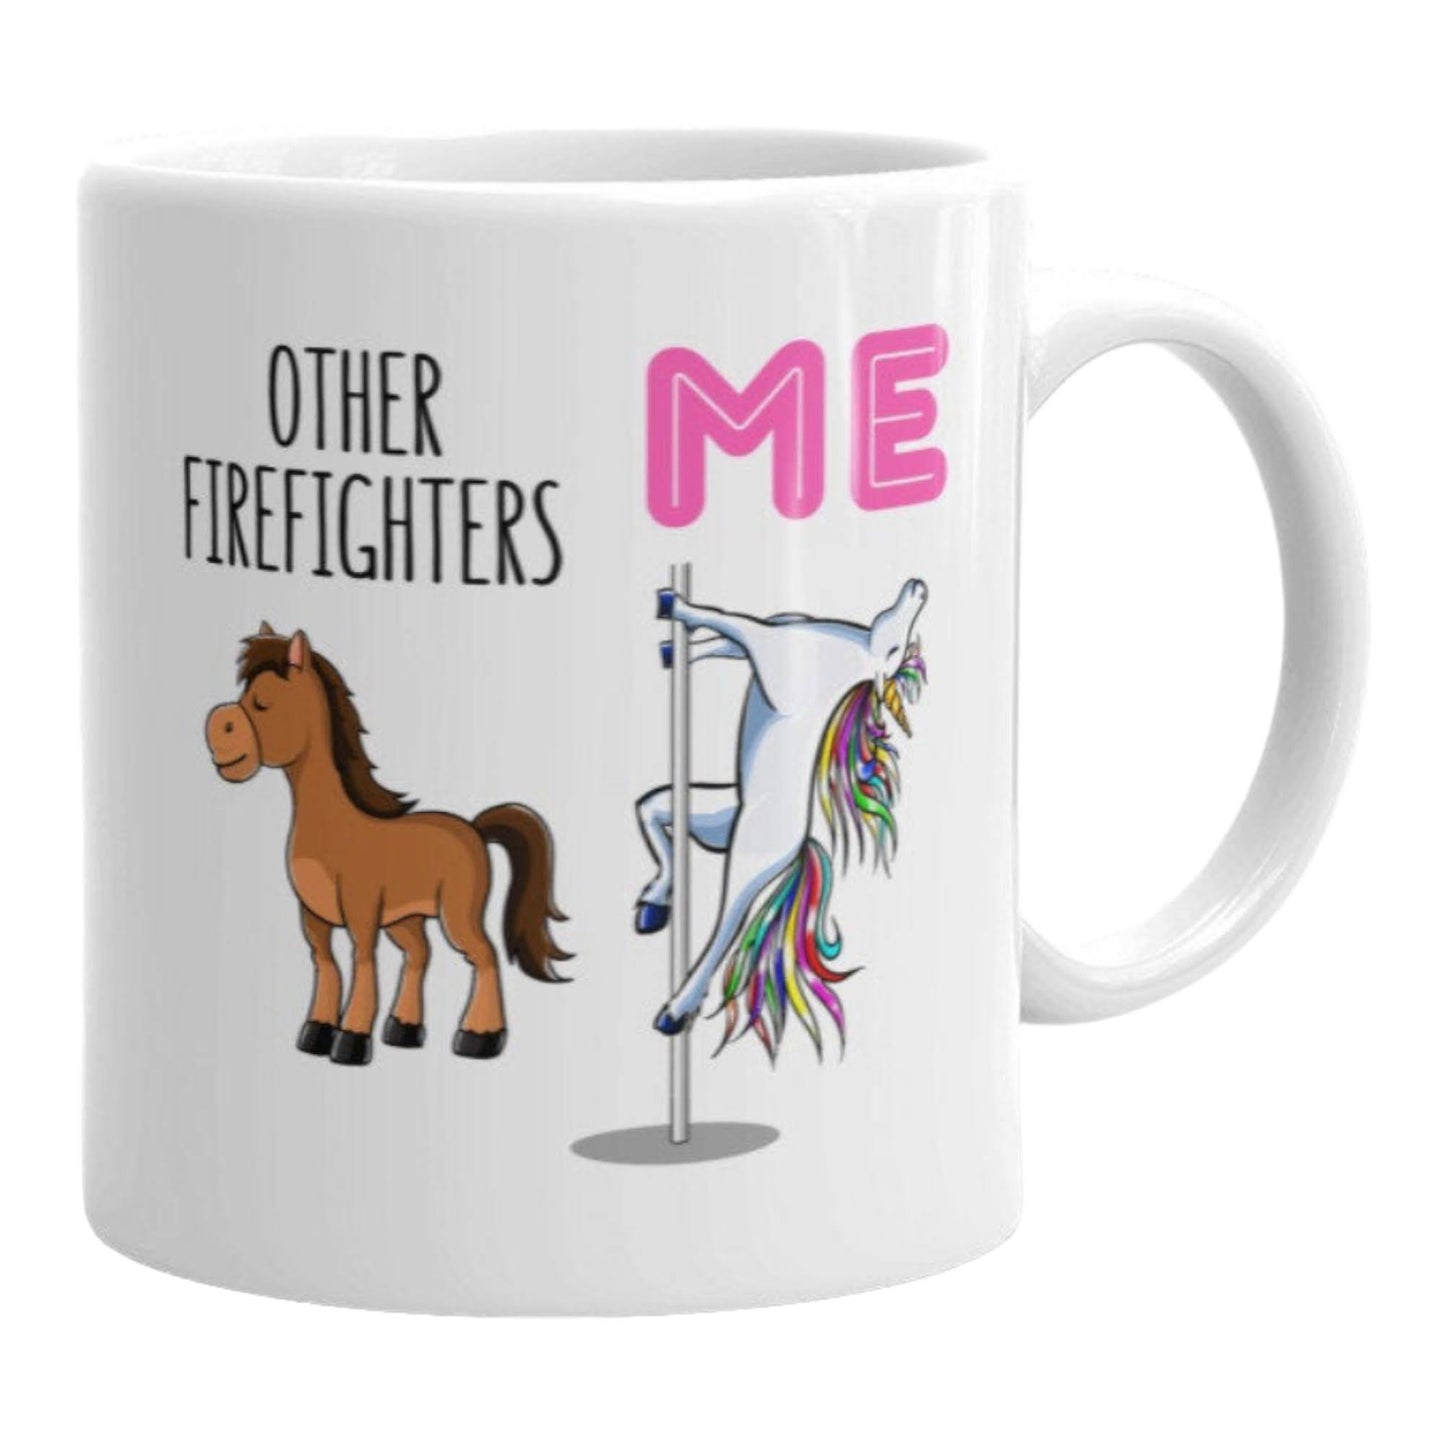 Other Fire Fighters 11 oz (312g) Novelty Mug